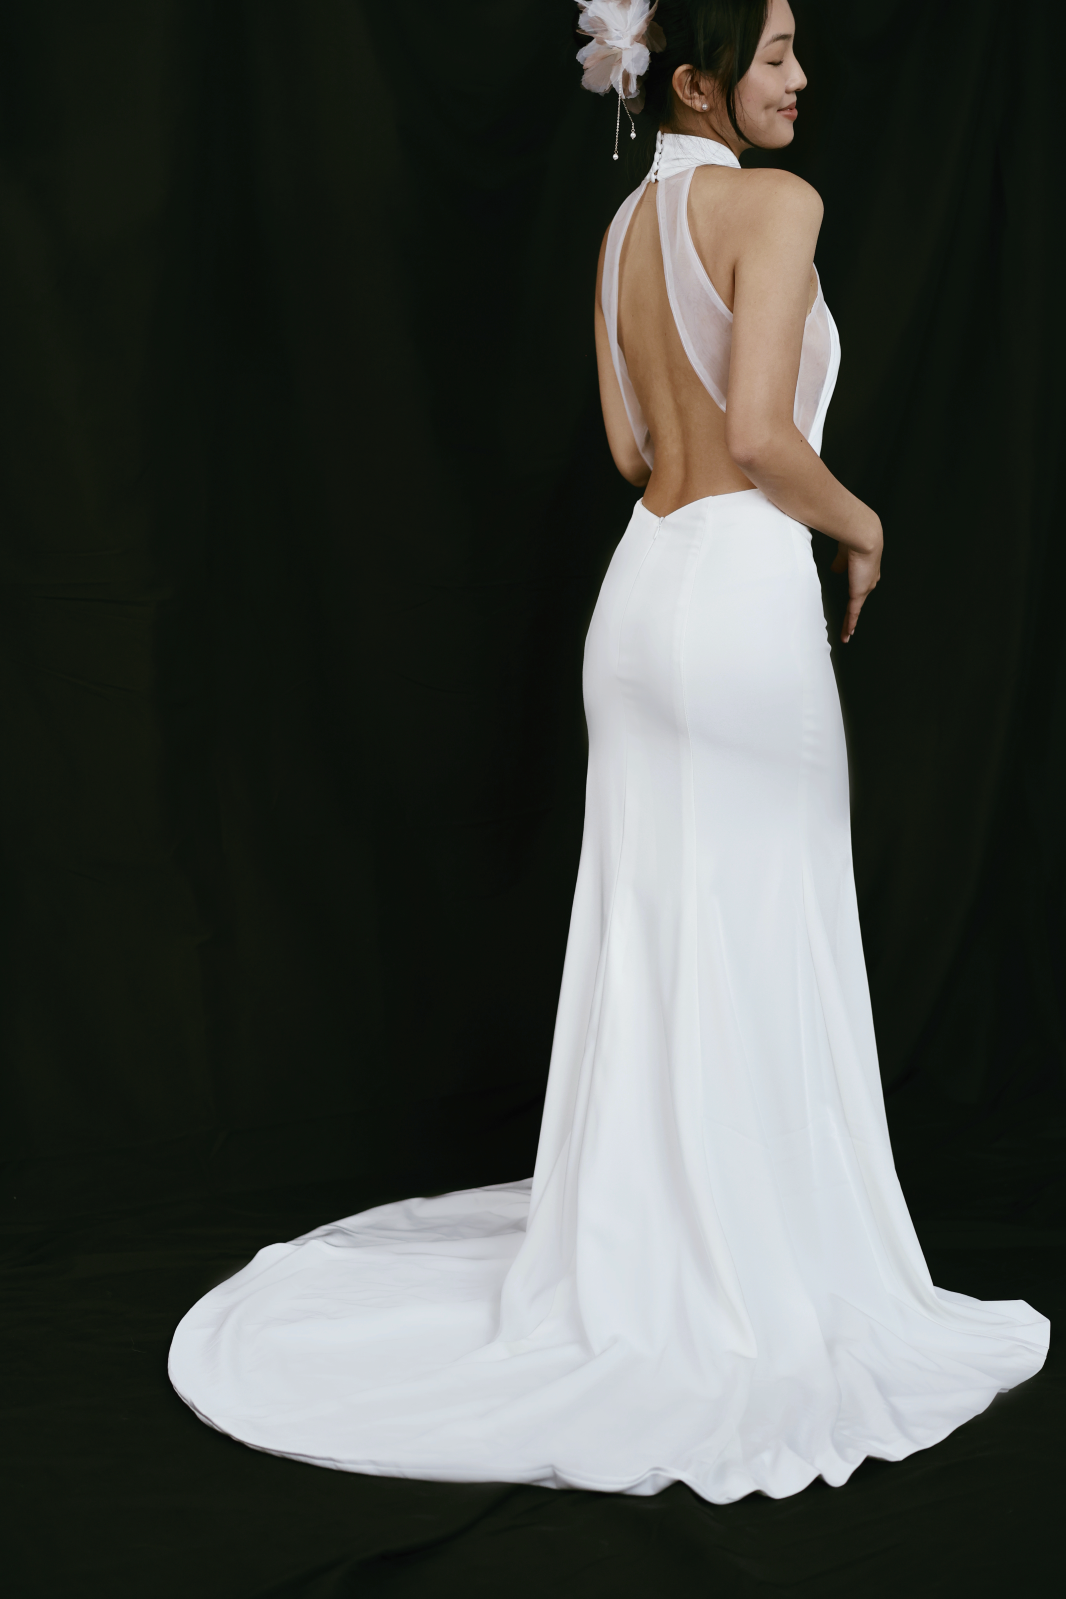 Shelly minimal halter crepe wedding dress with open back | Bone and Grey Bridal